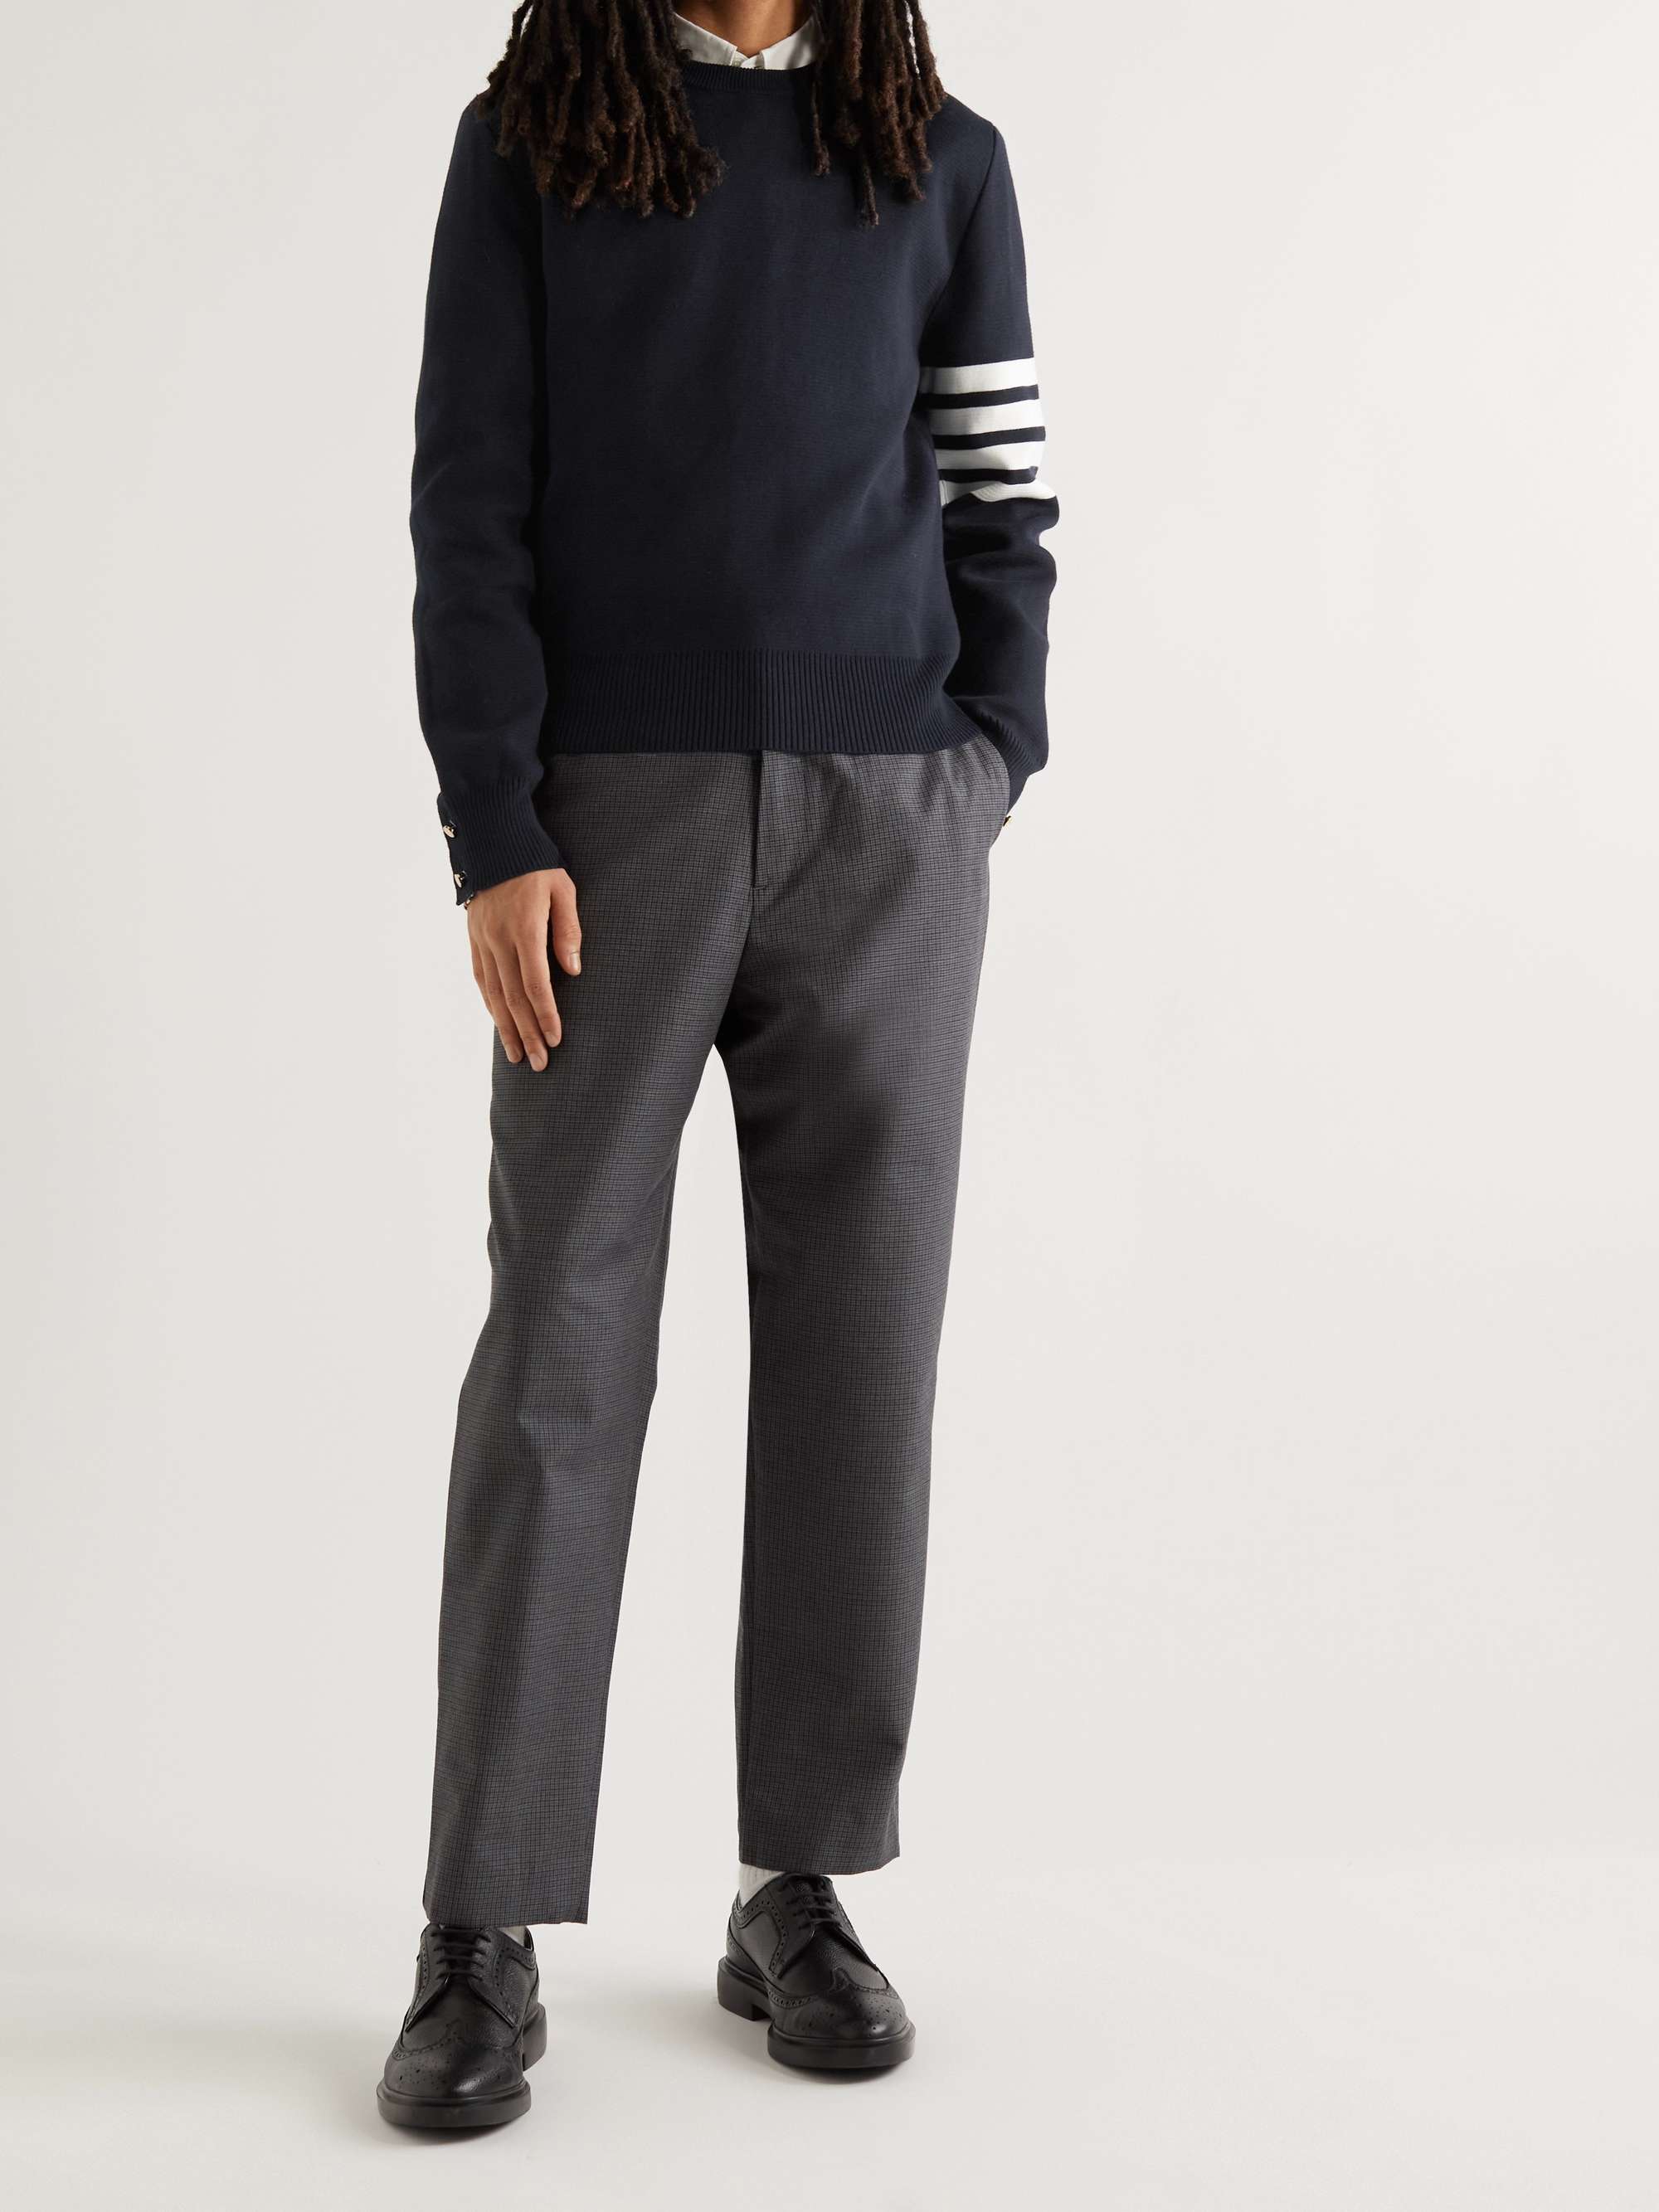 THOM BROWNE Striped Grosgrain-Trimmed Cotton Sweater for Men | MR PORTER